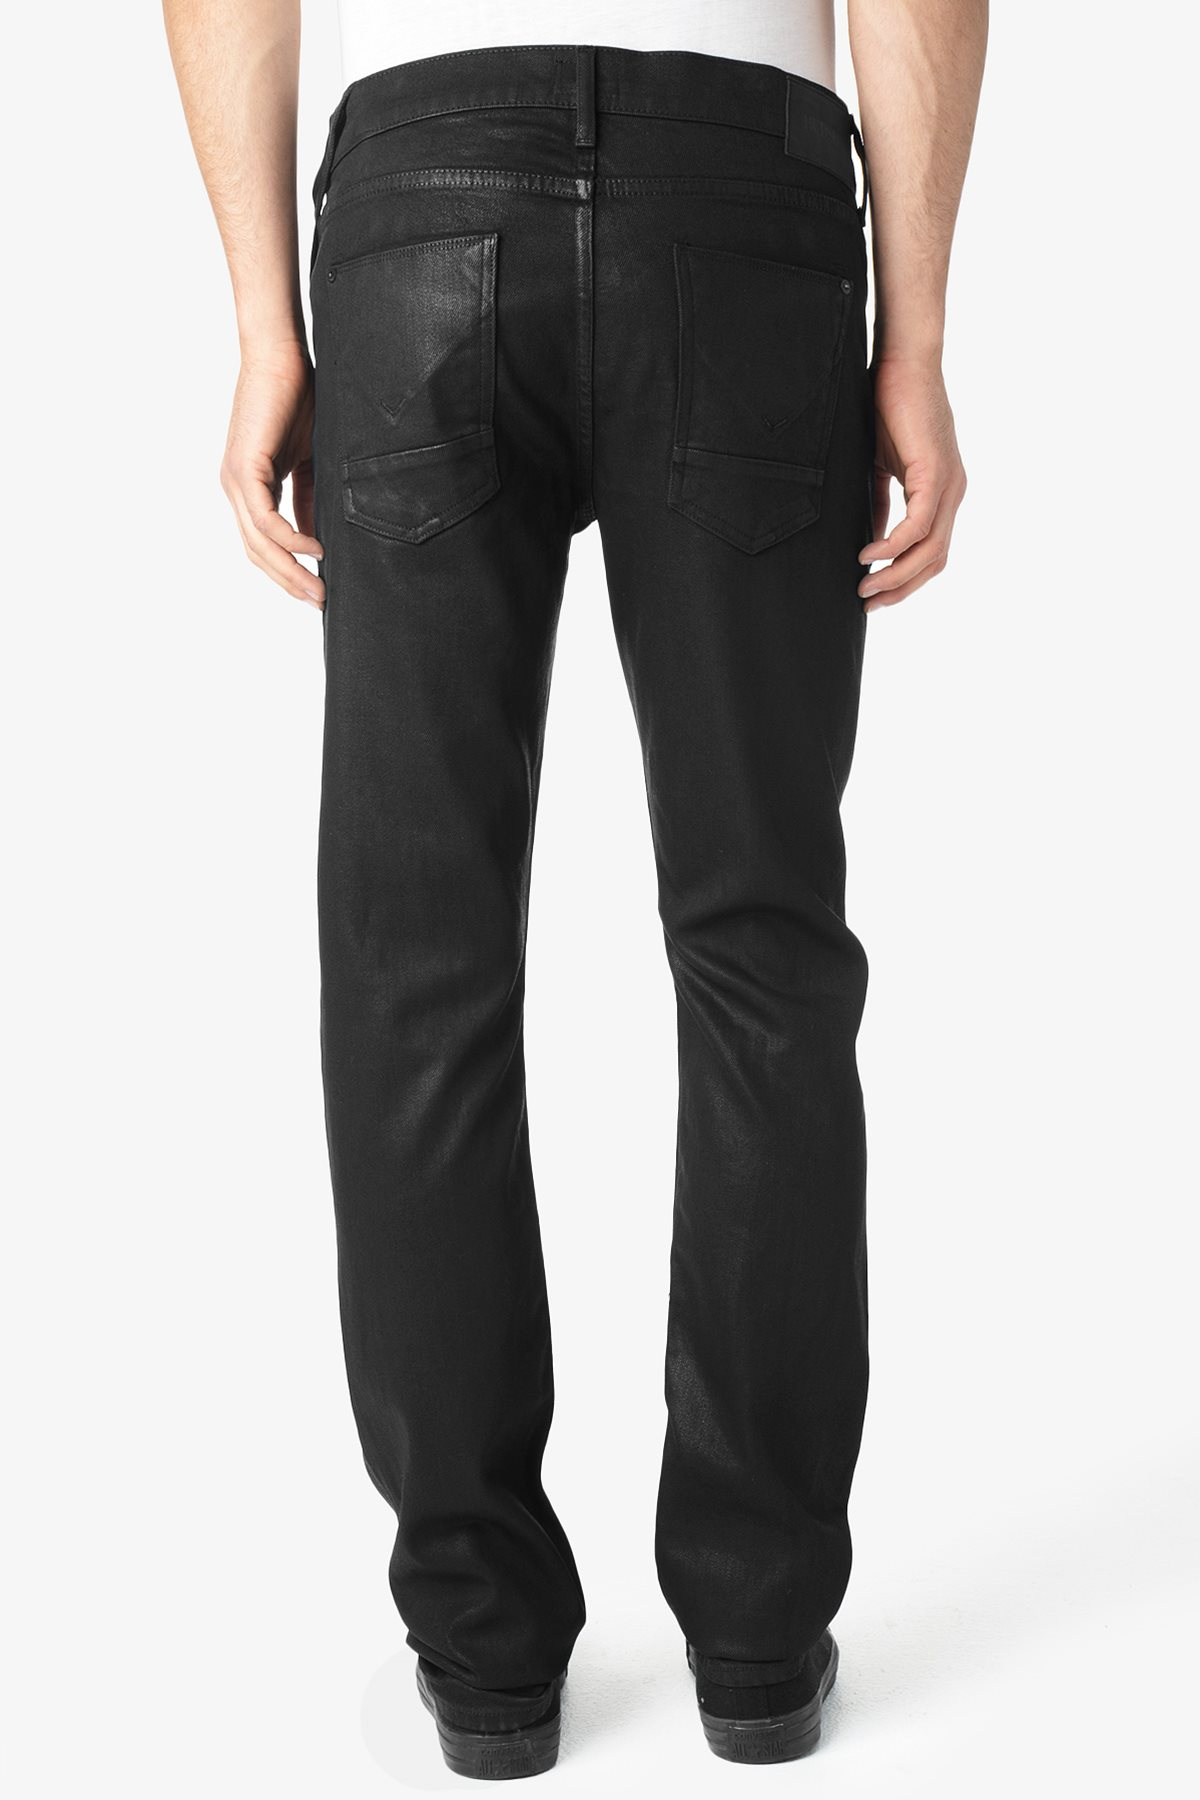 Hudson Jeans Barrow Skinny in Black for Men - Lyst